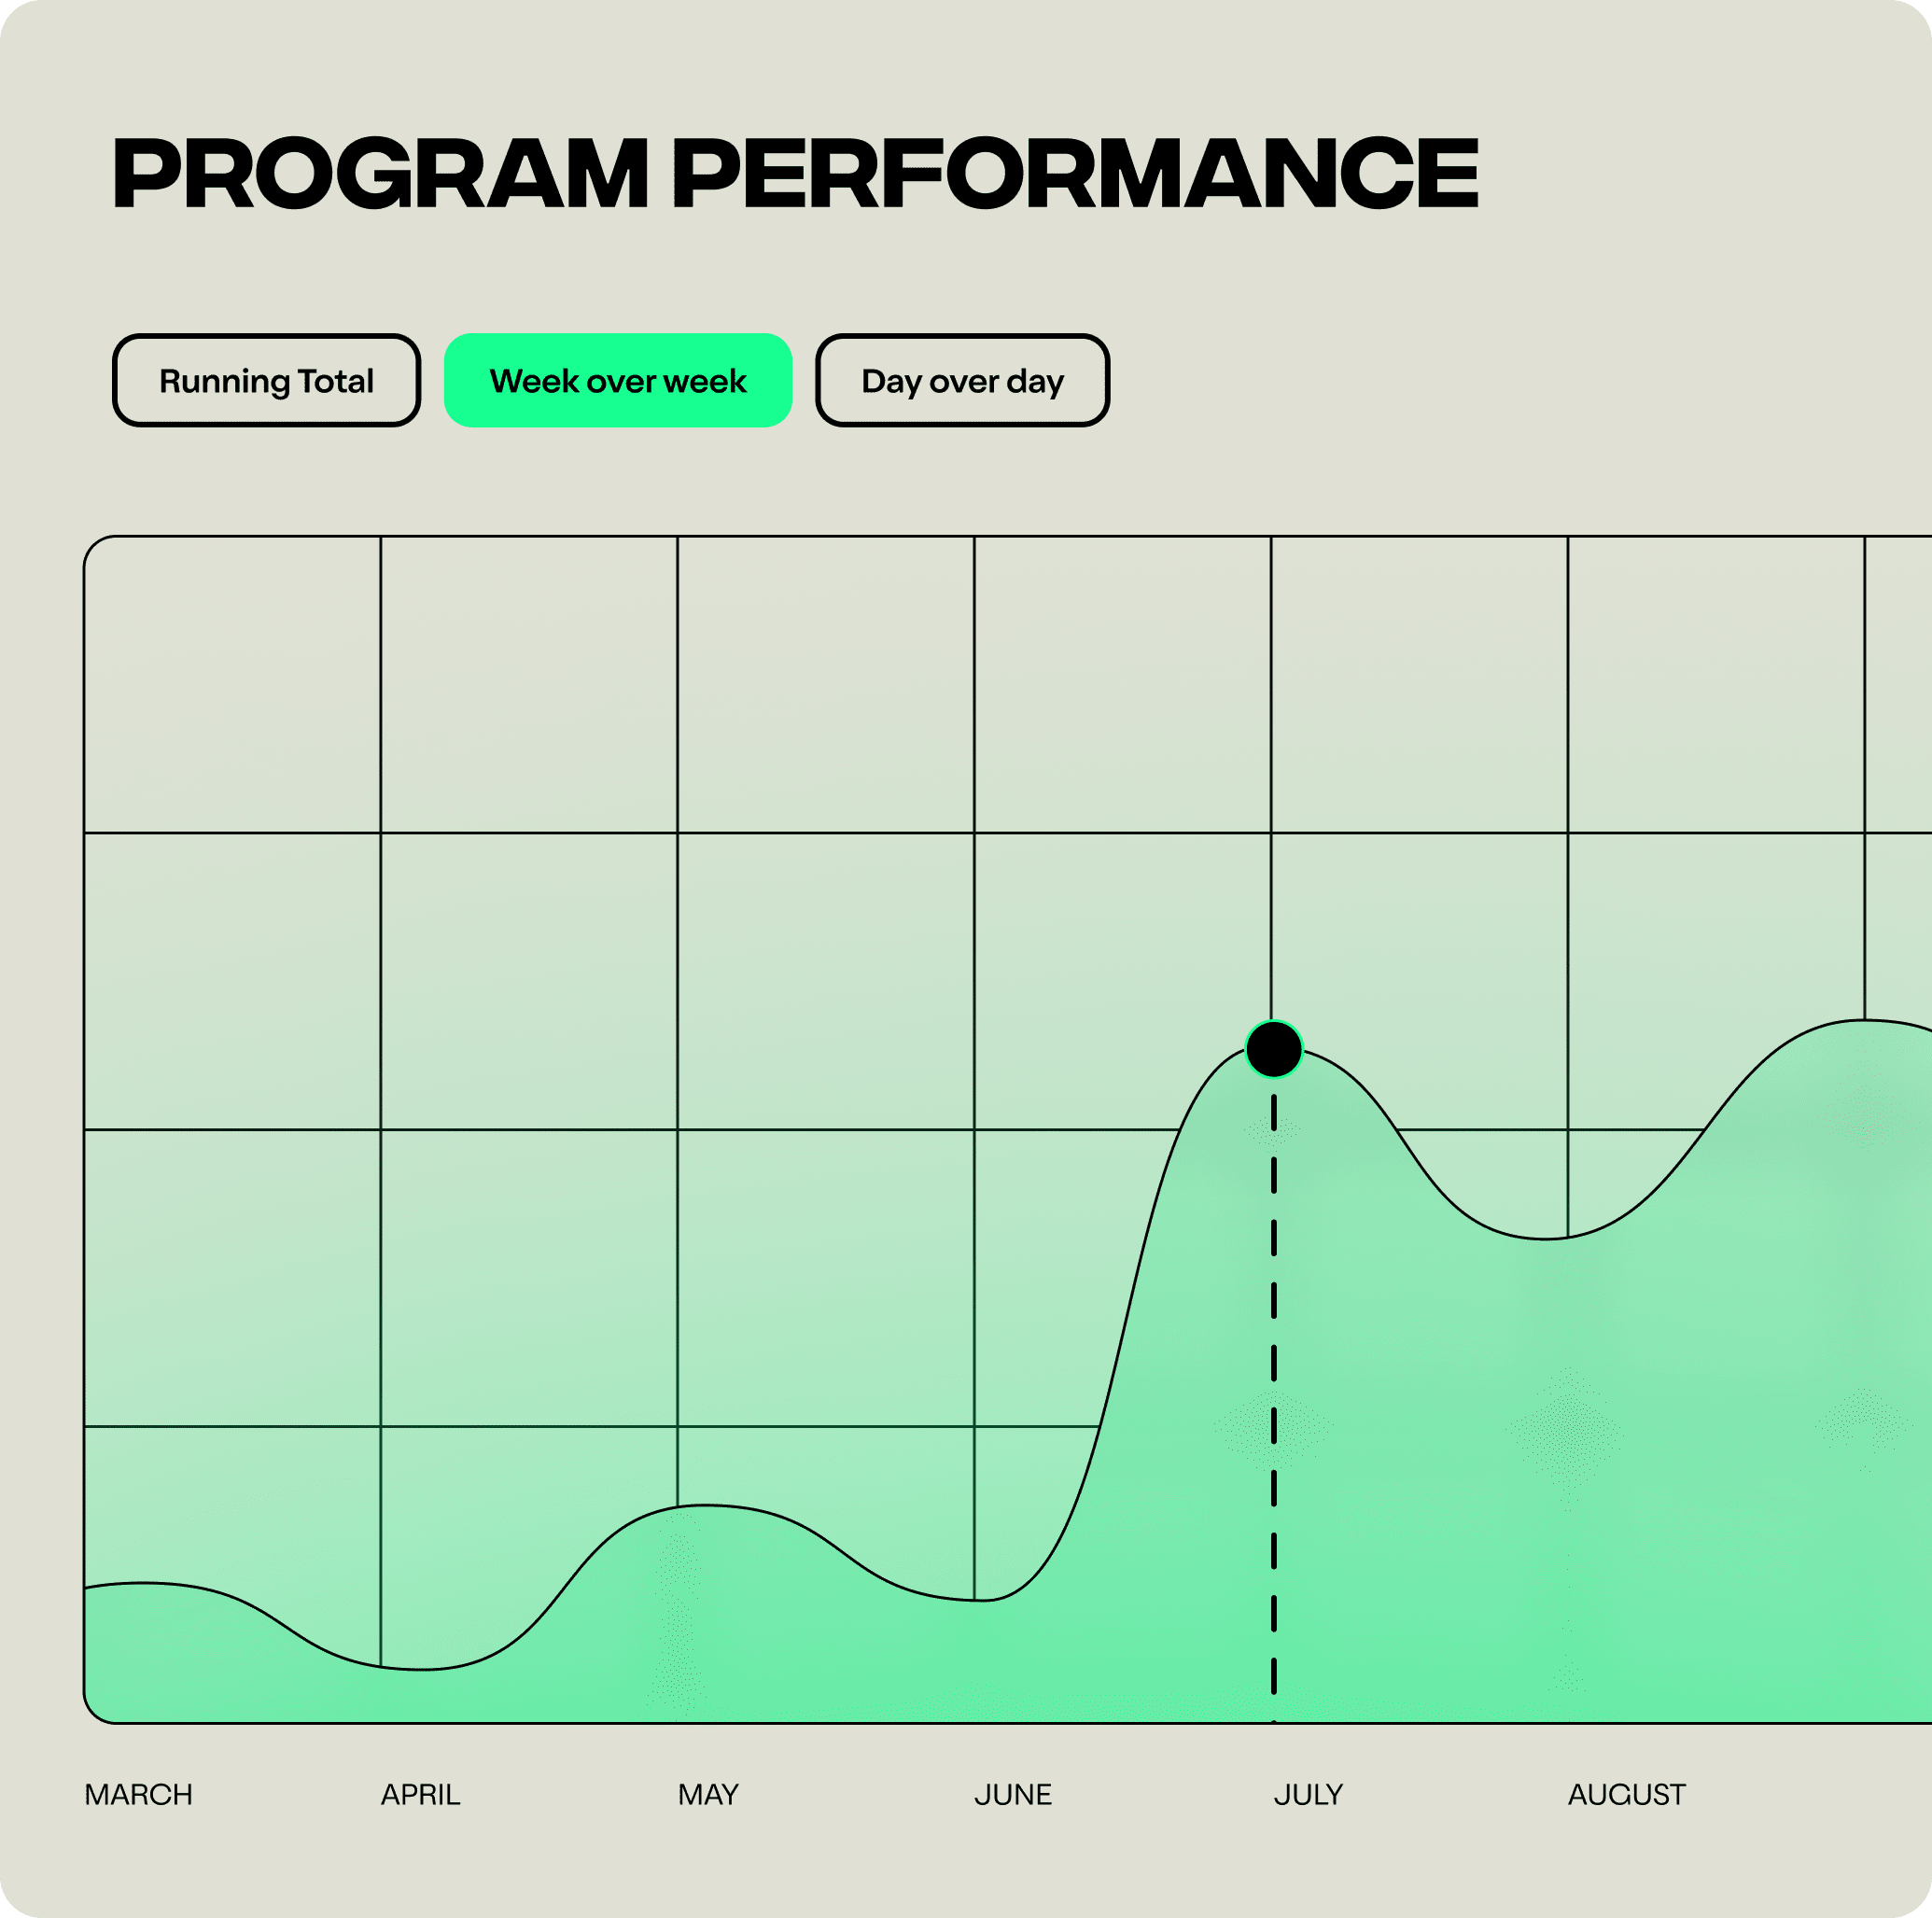 Clyde program performance